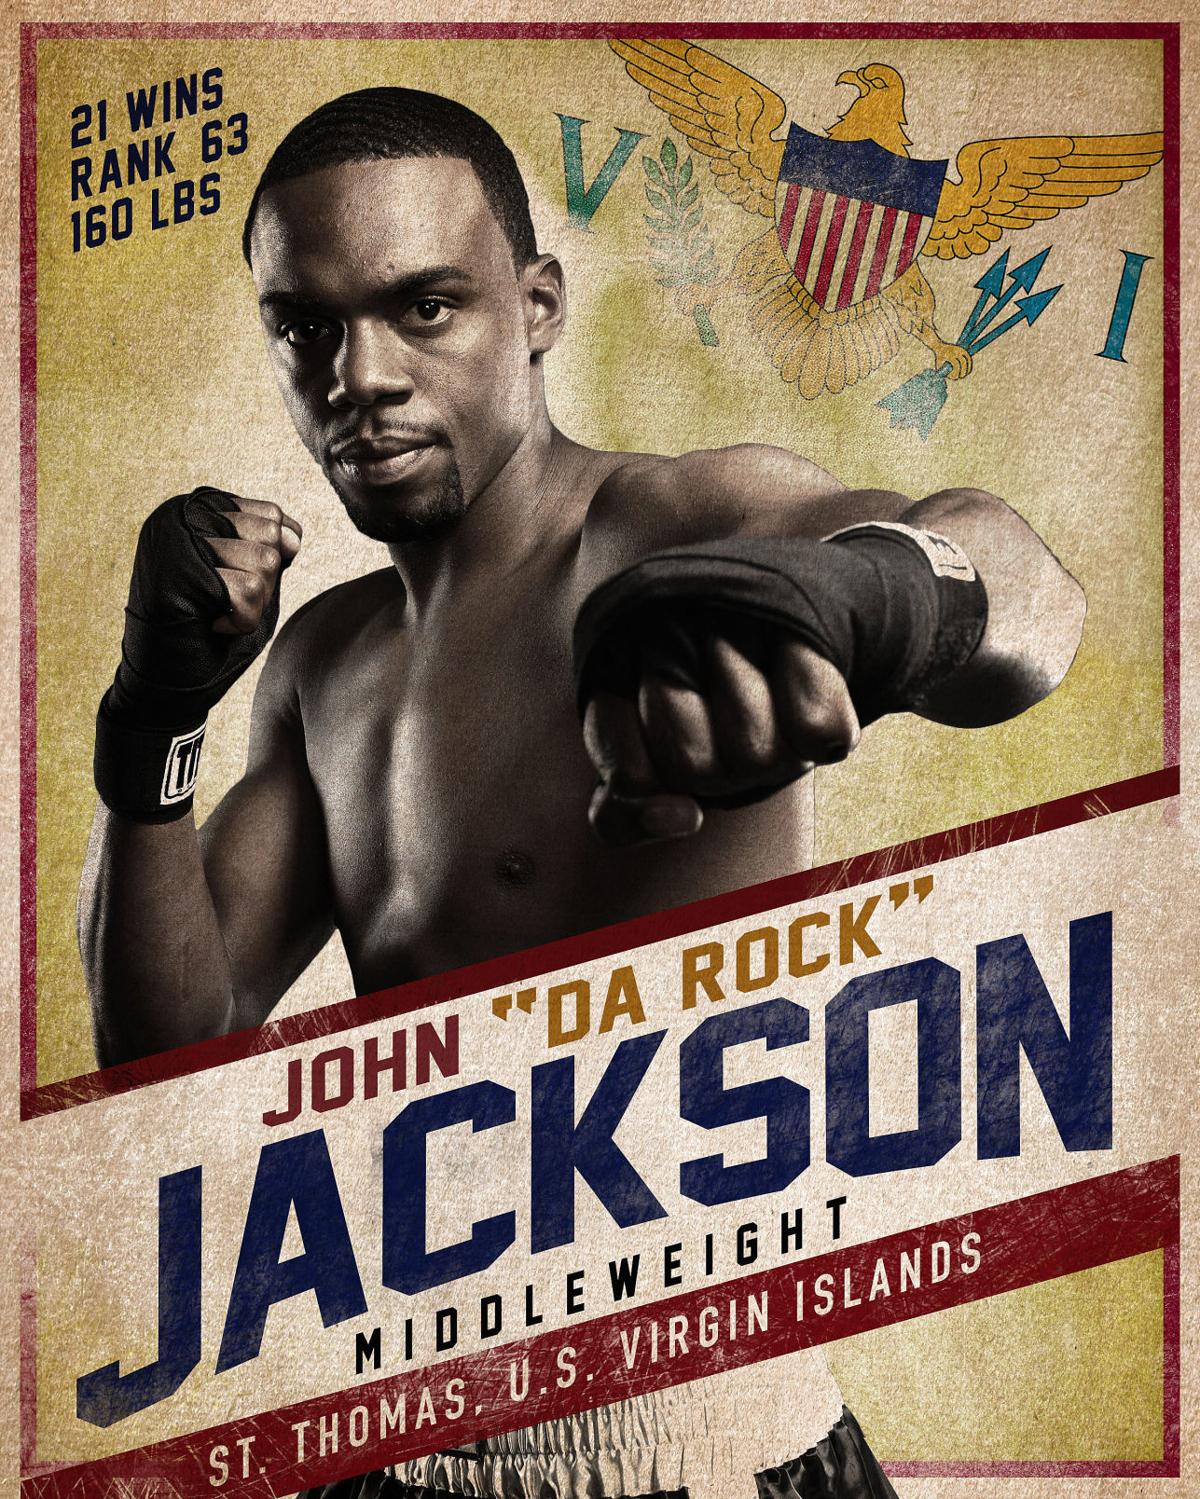 John Jackson poster